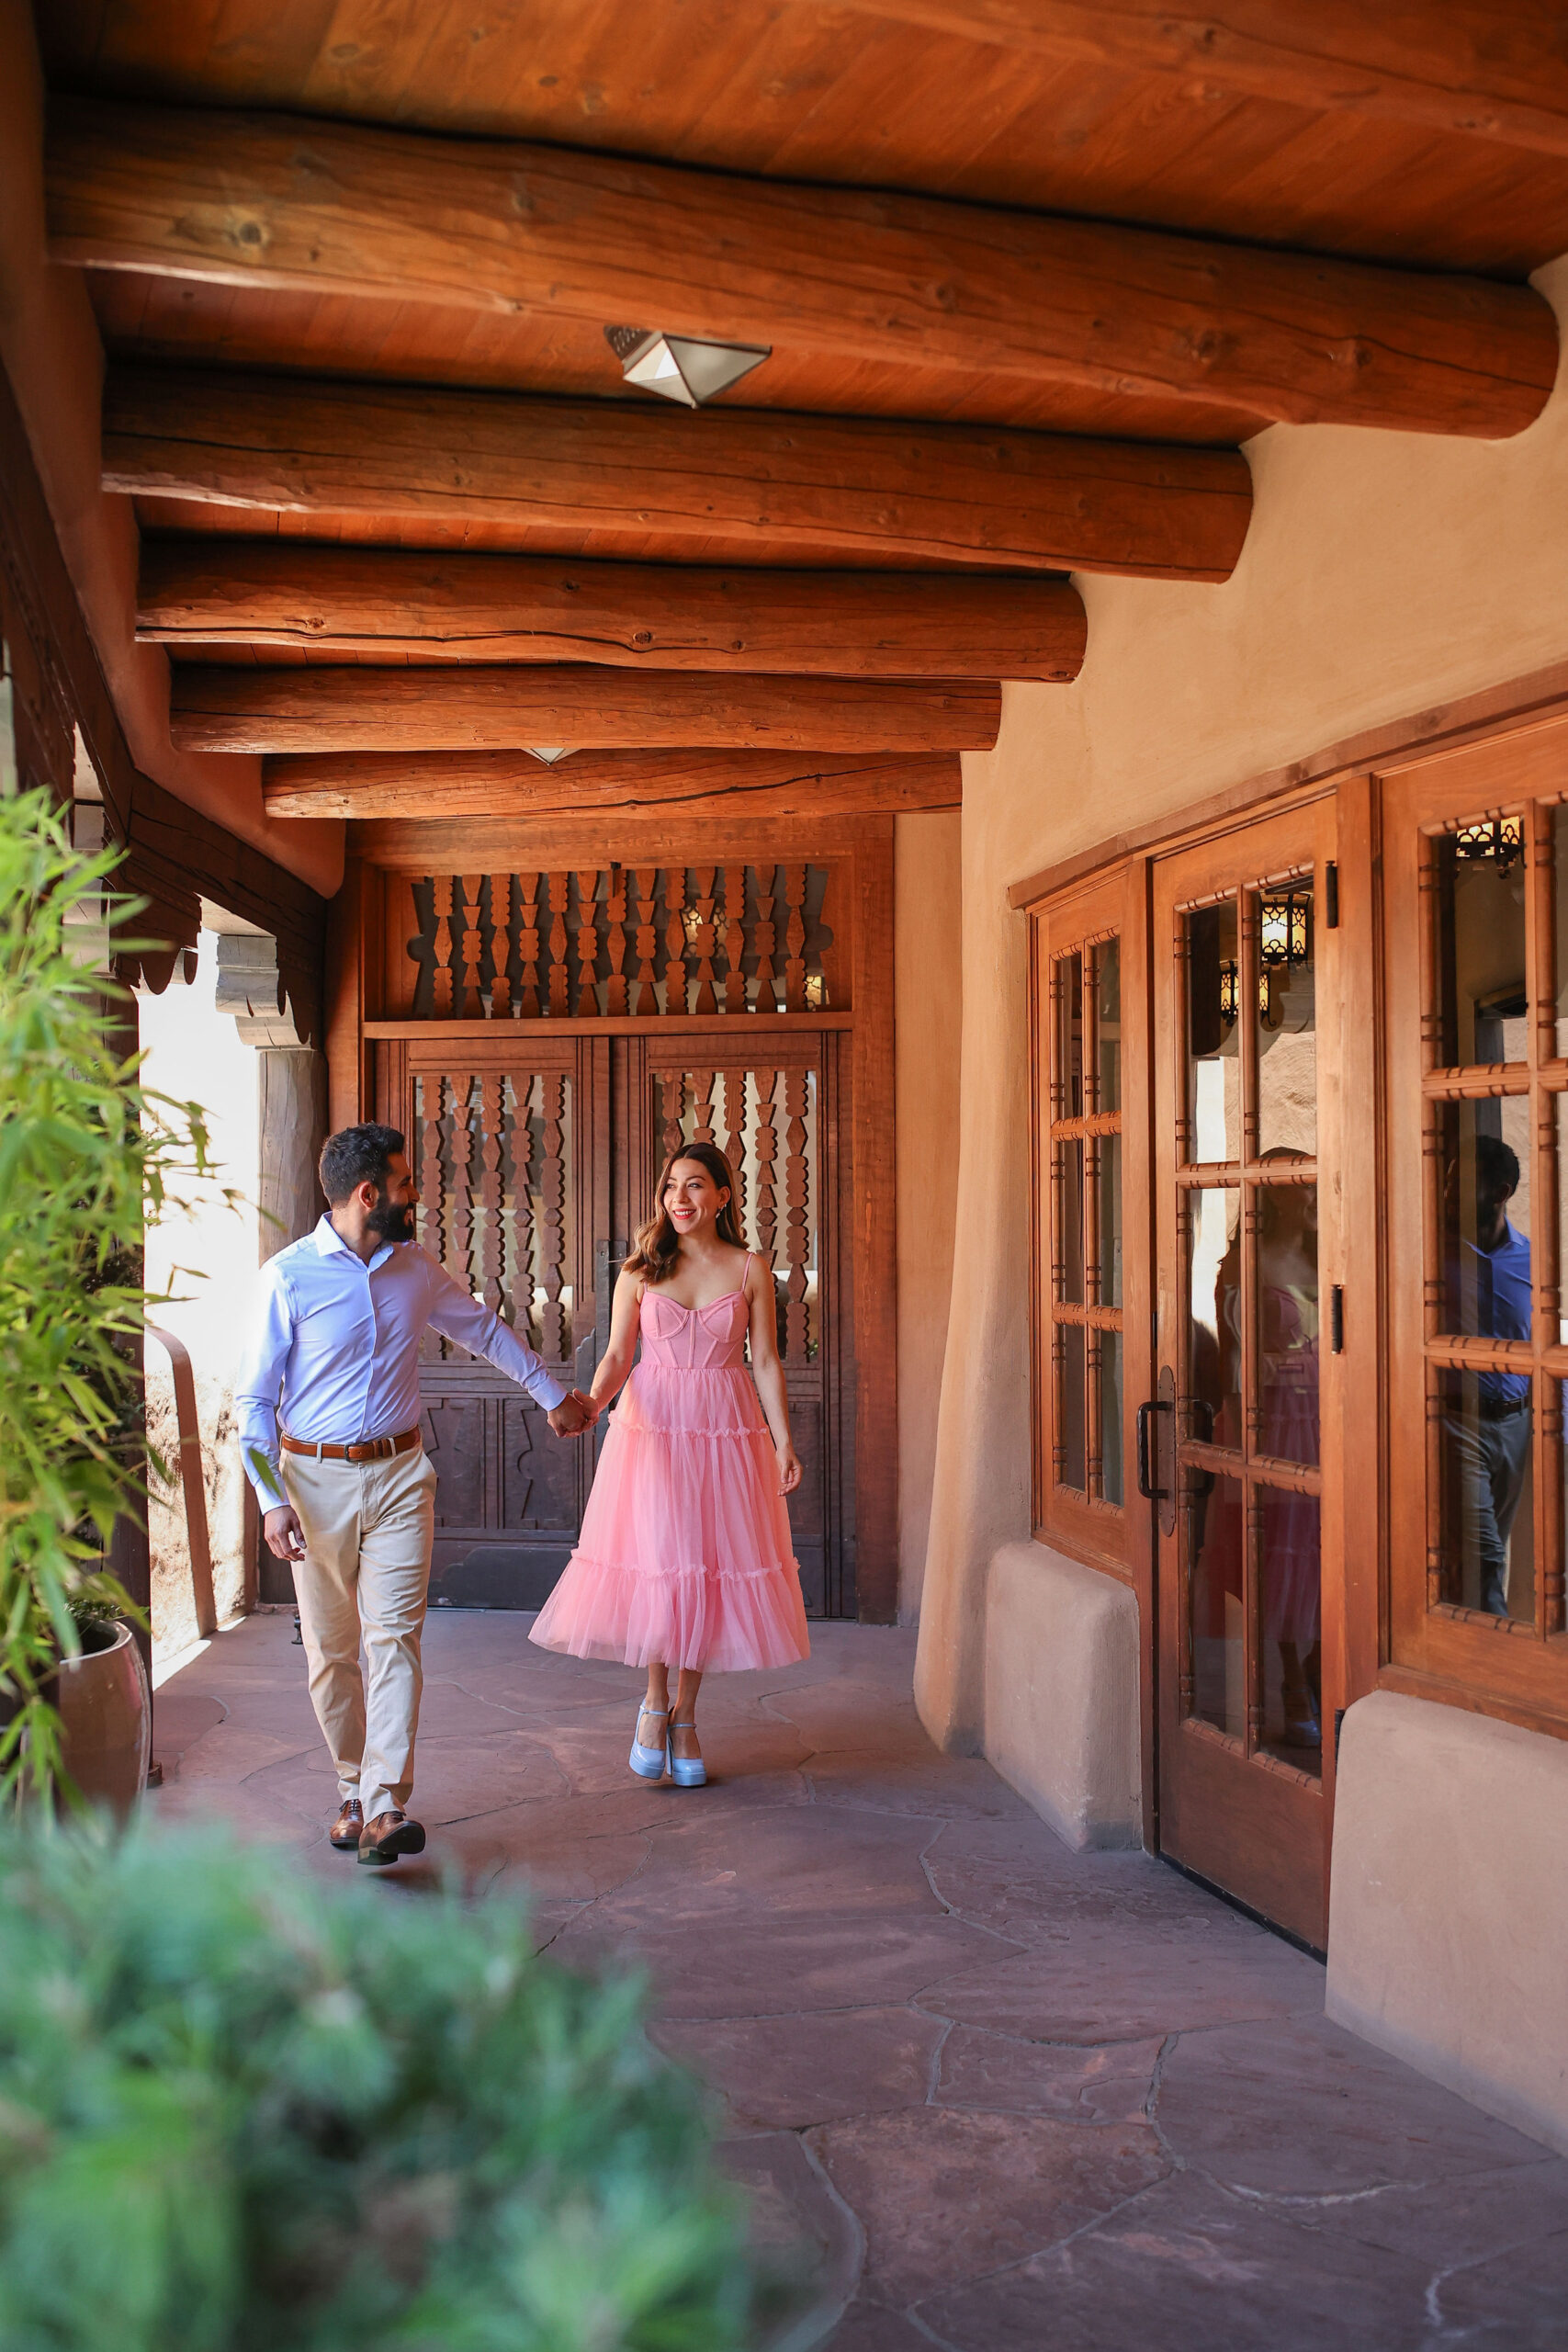 Armando and Marisol holding hands and walking through La Fonda